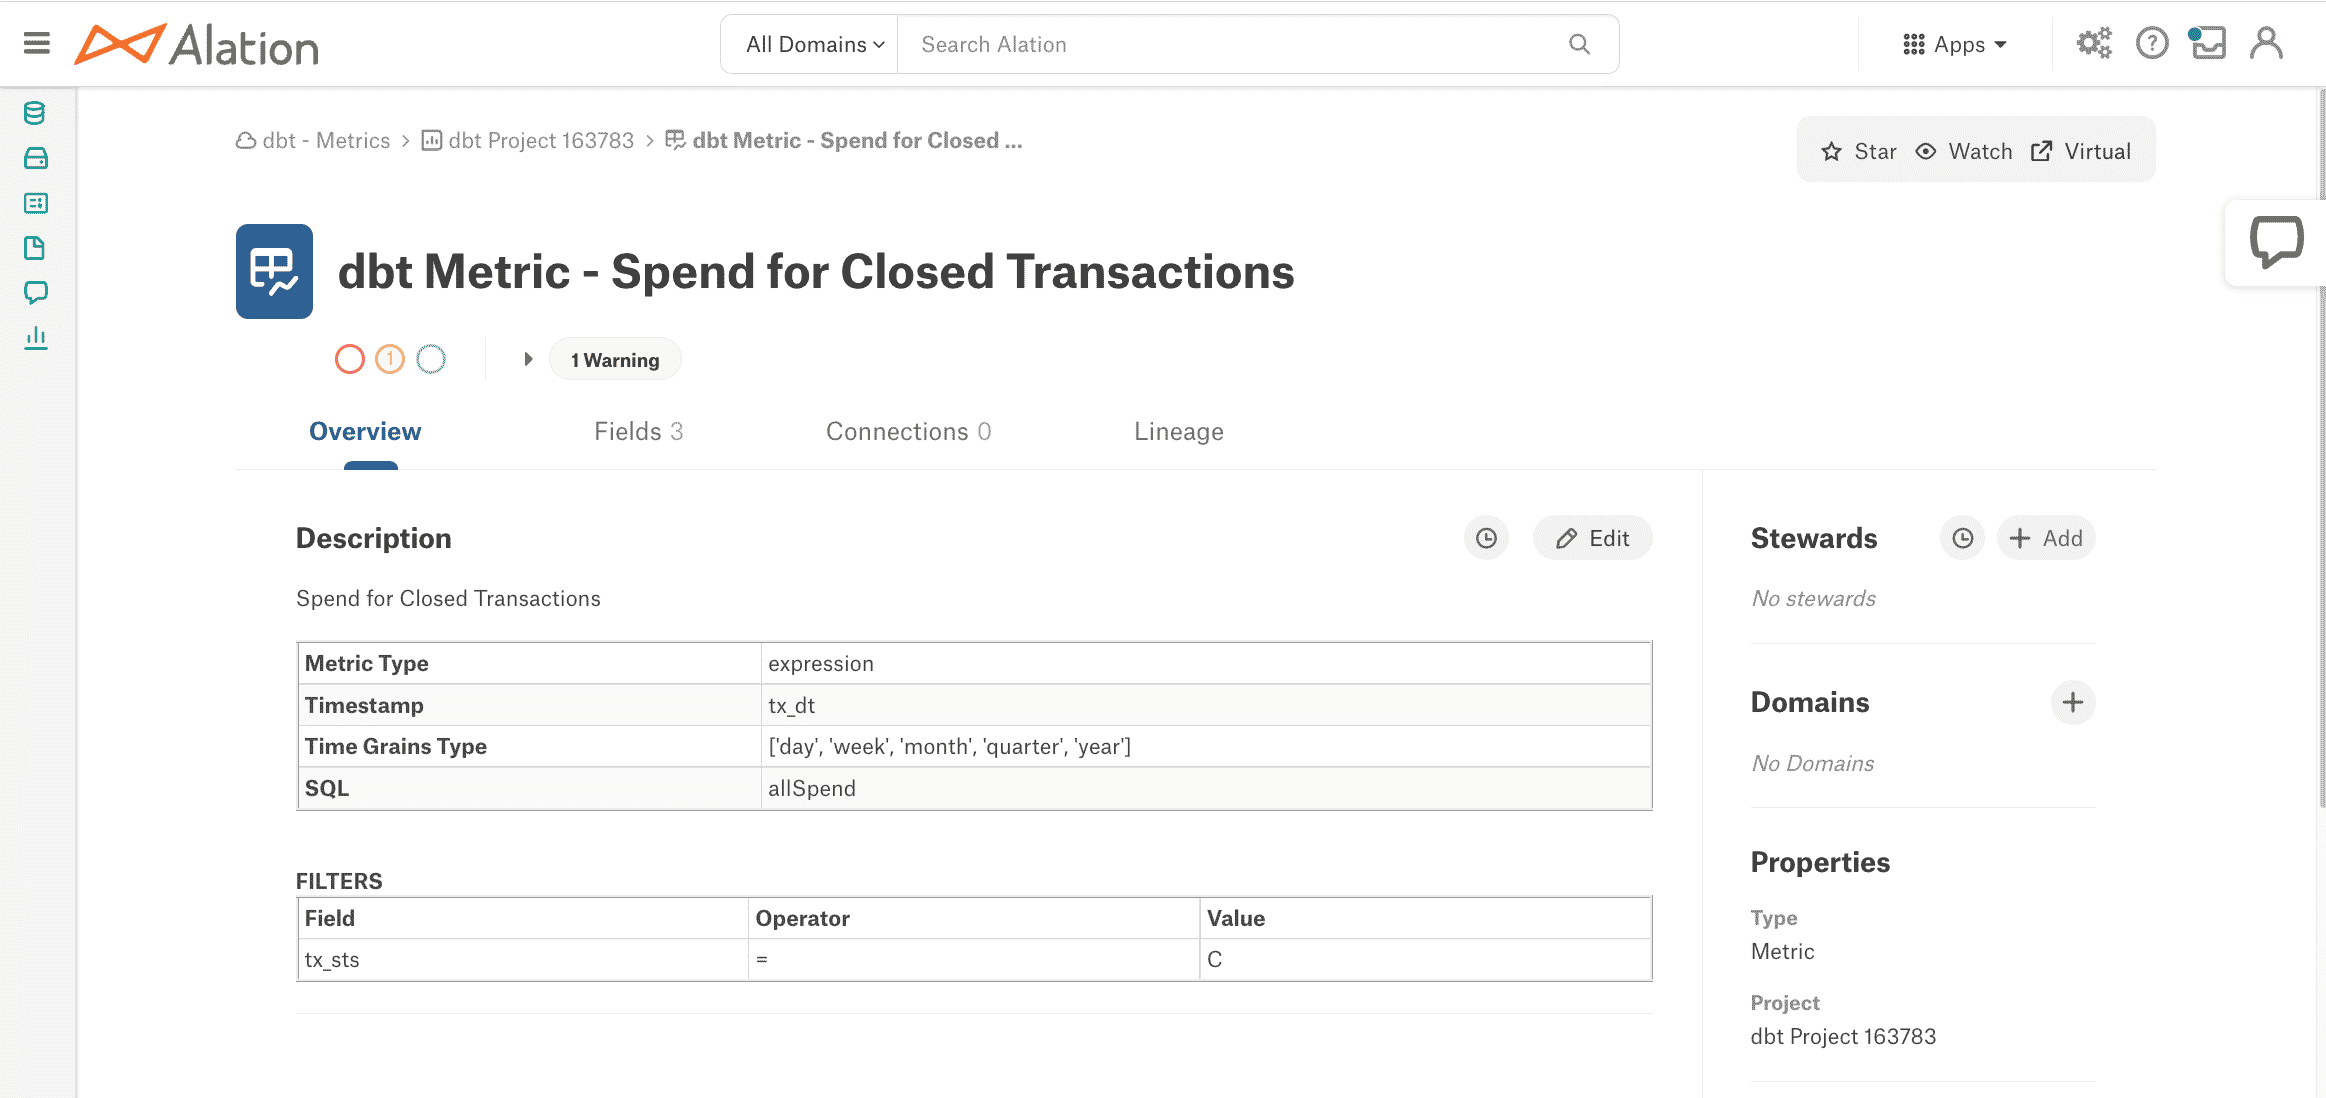  Alation Data Catalog showcasing dbt Metric - spend for closed transactions.